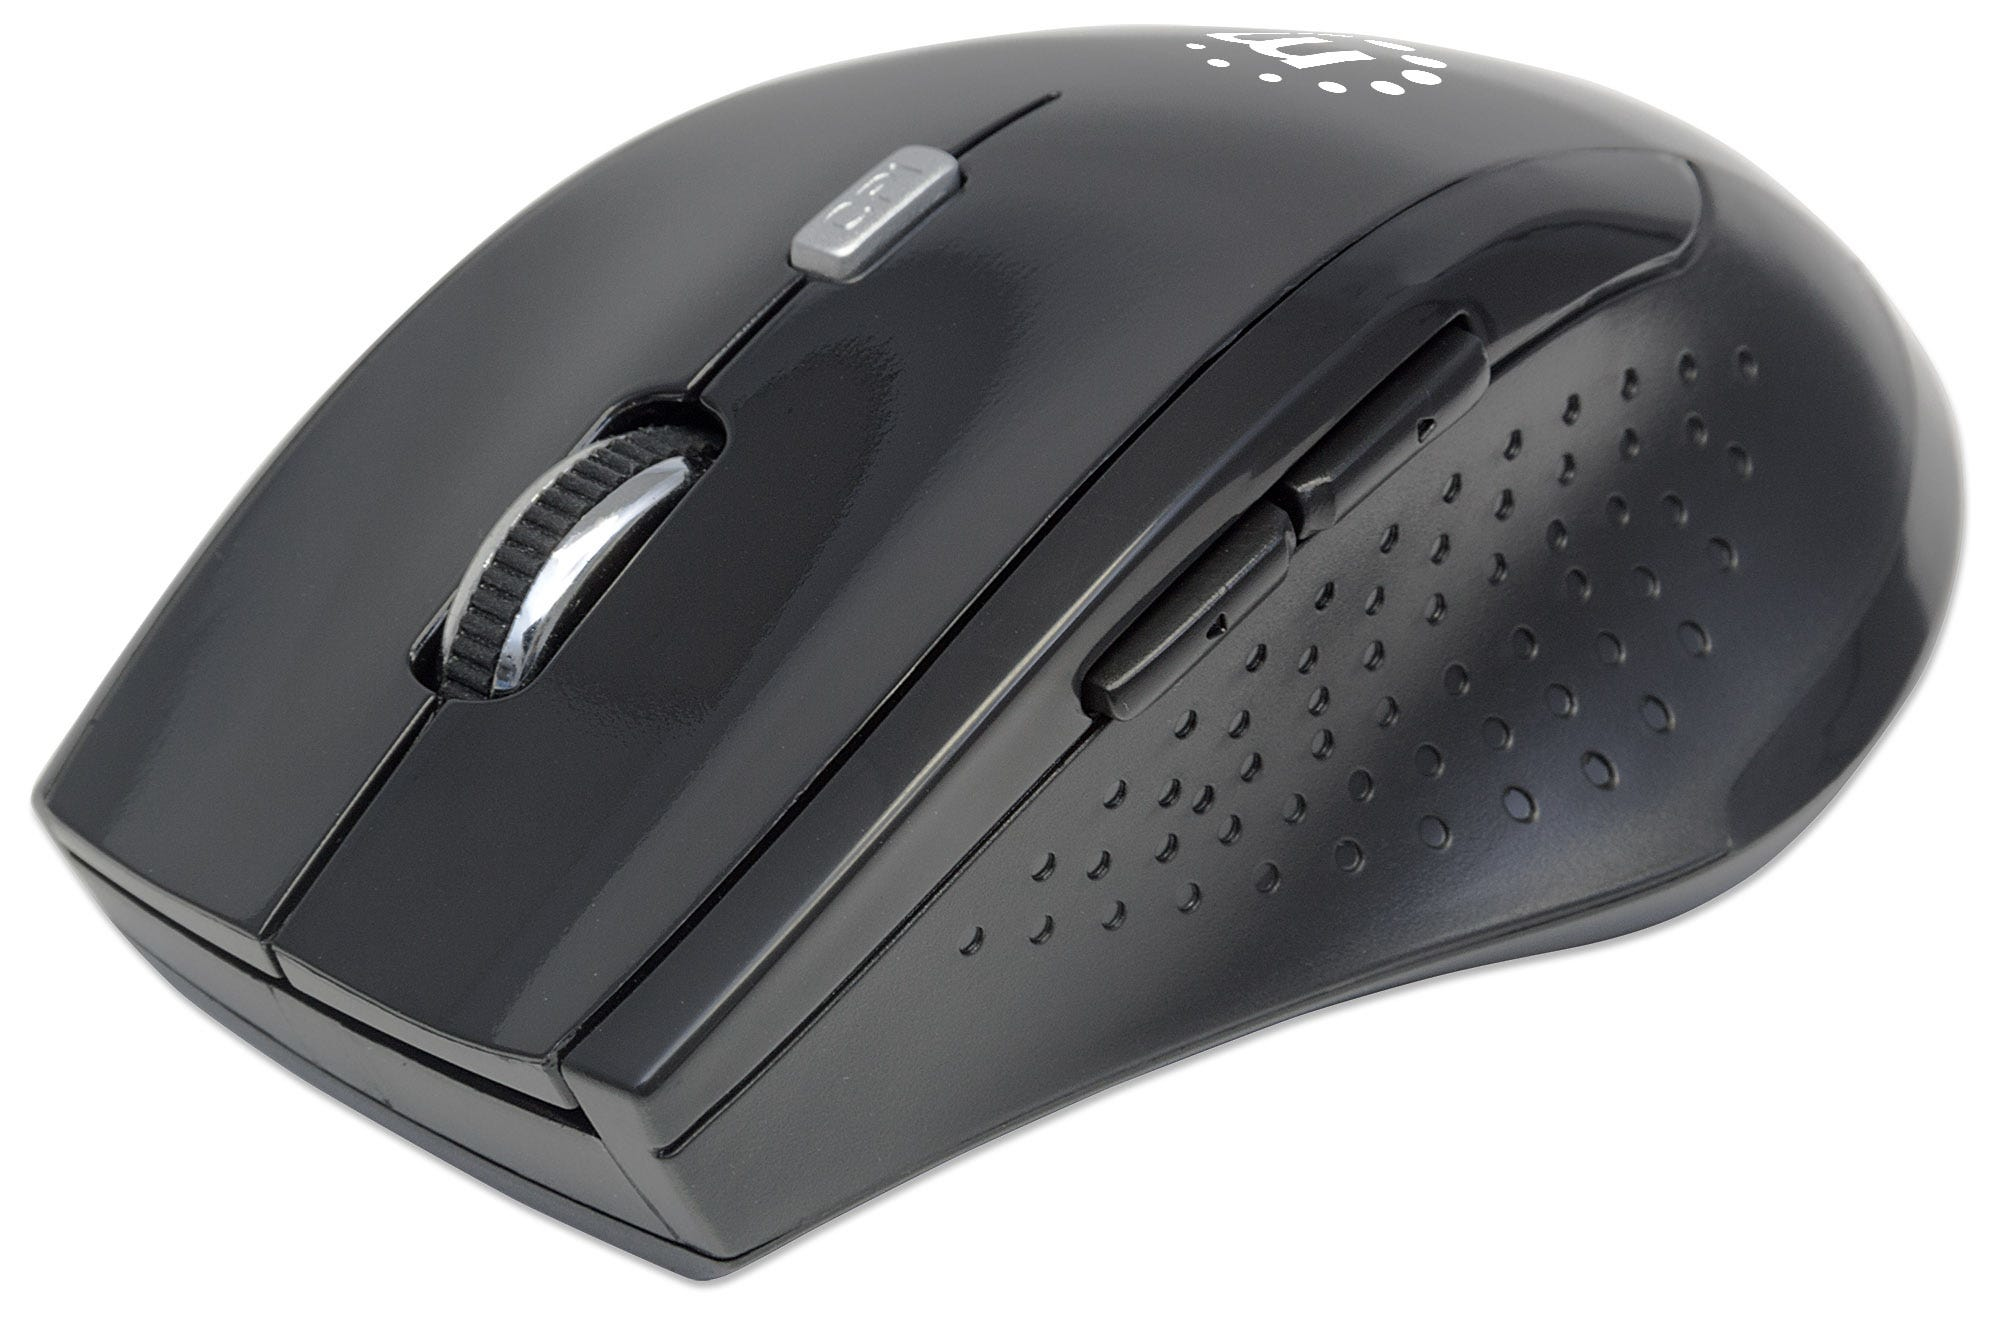 Manhattan Curve Wireless Mouse, Black, Adjustable DPI (800, 1200 or 1600dpi)